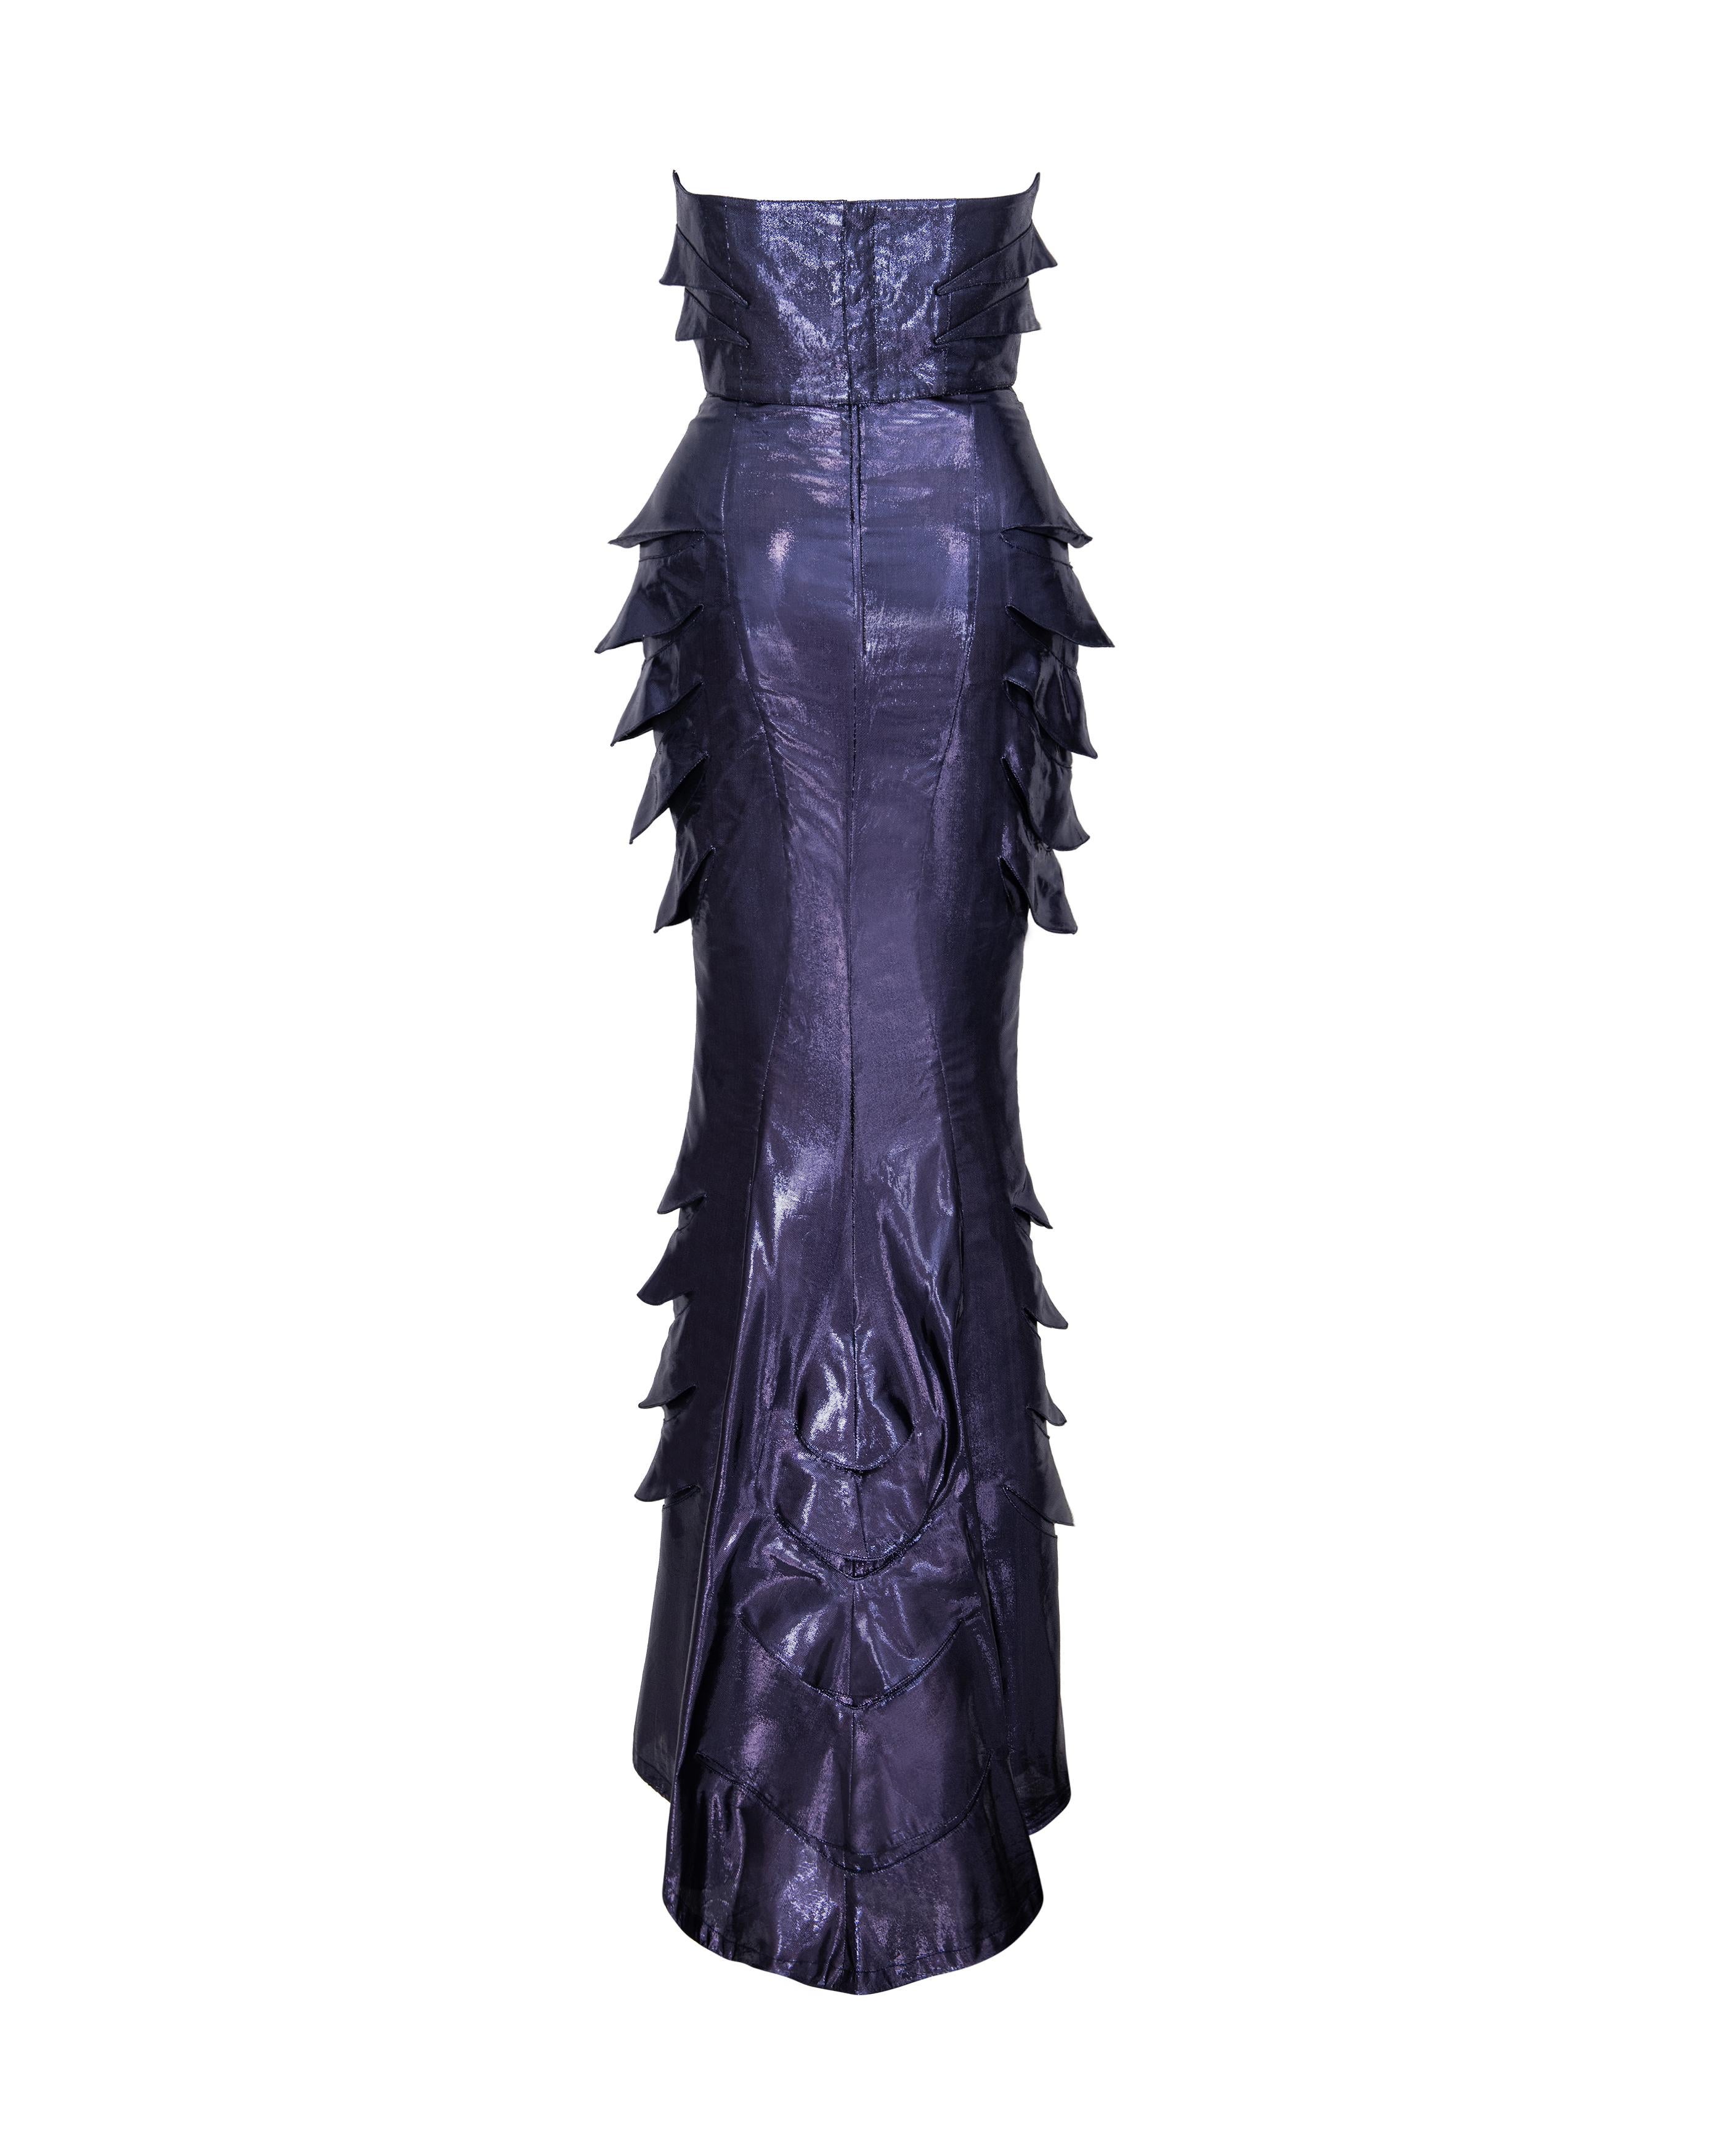 S/S 1989 Thierry Mugler 'Atlantis' Collection Metallic Mermaid Skirt Set 2